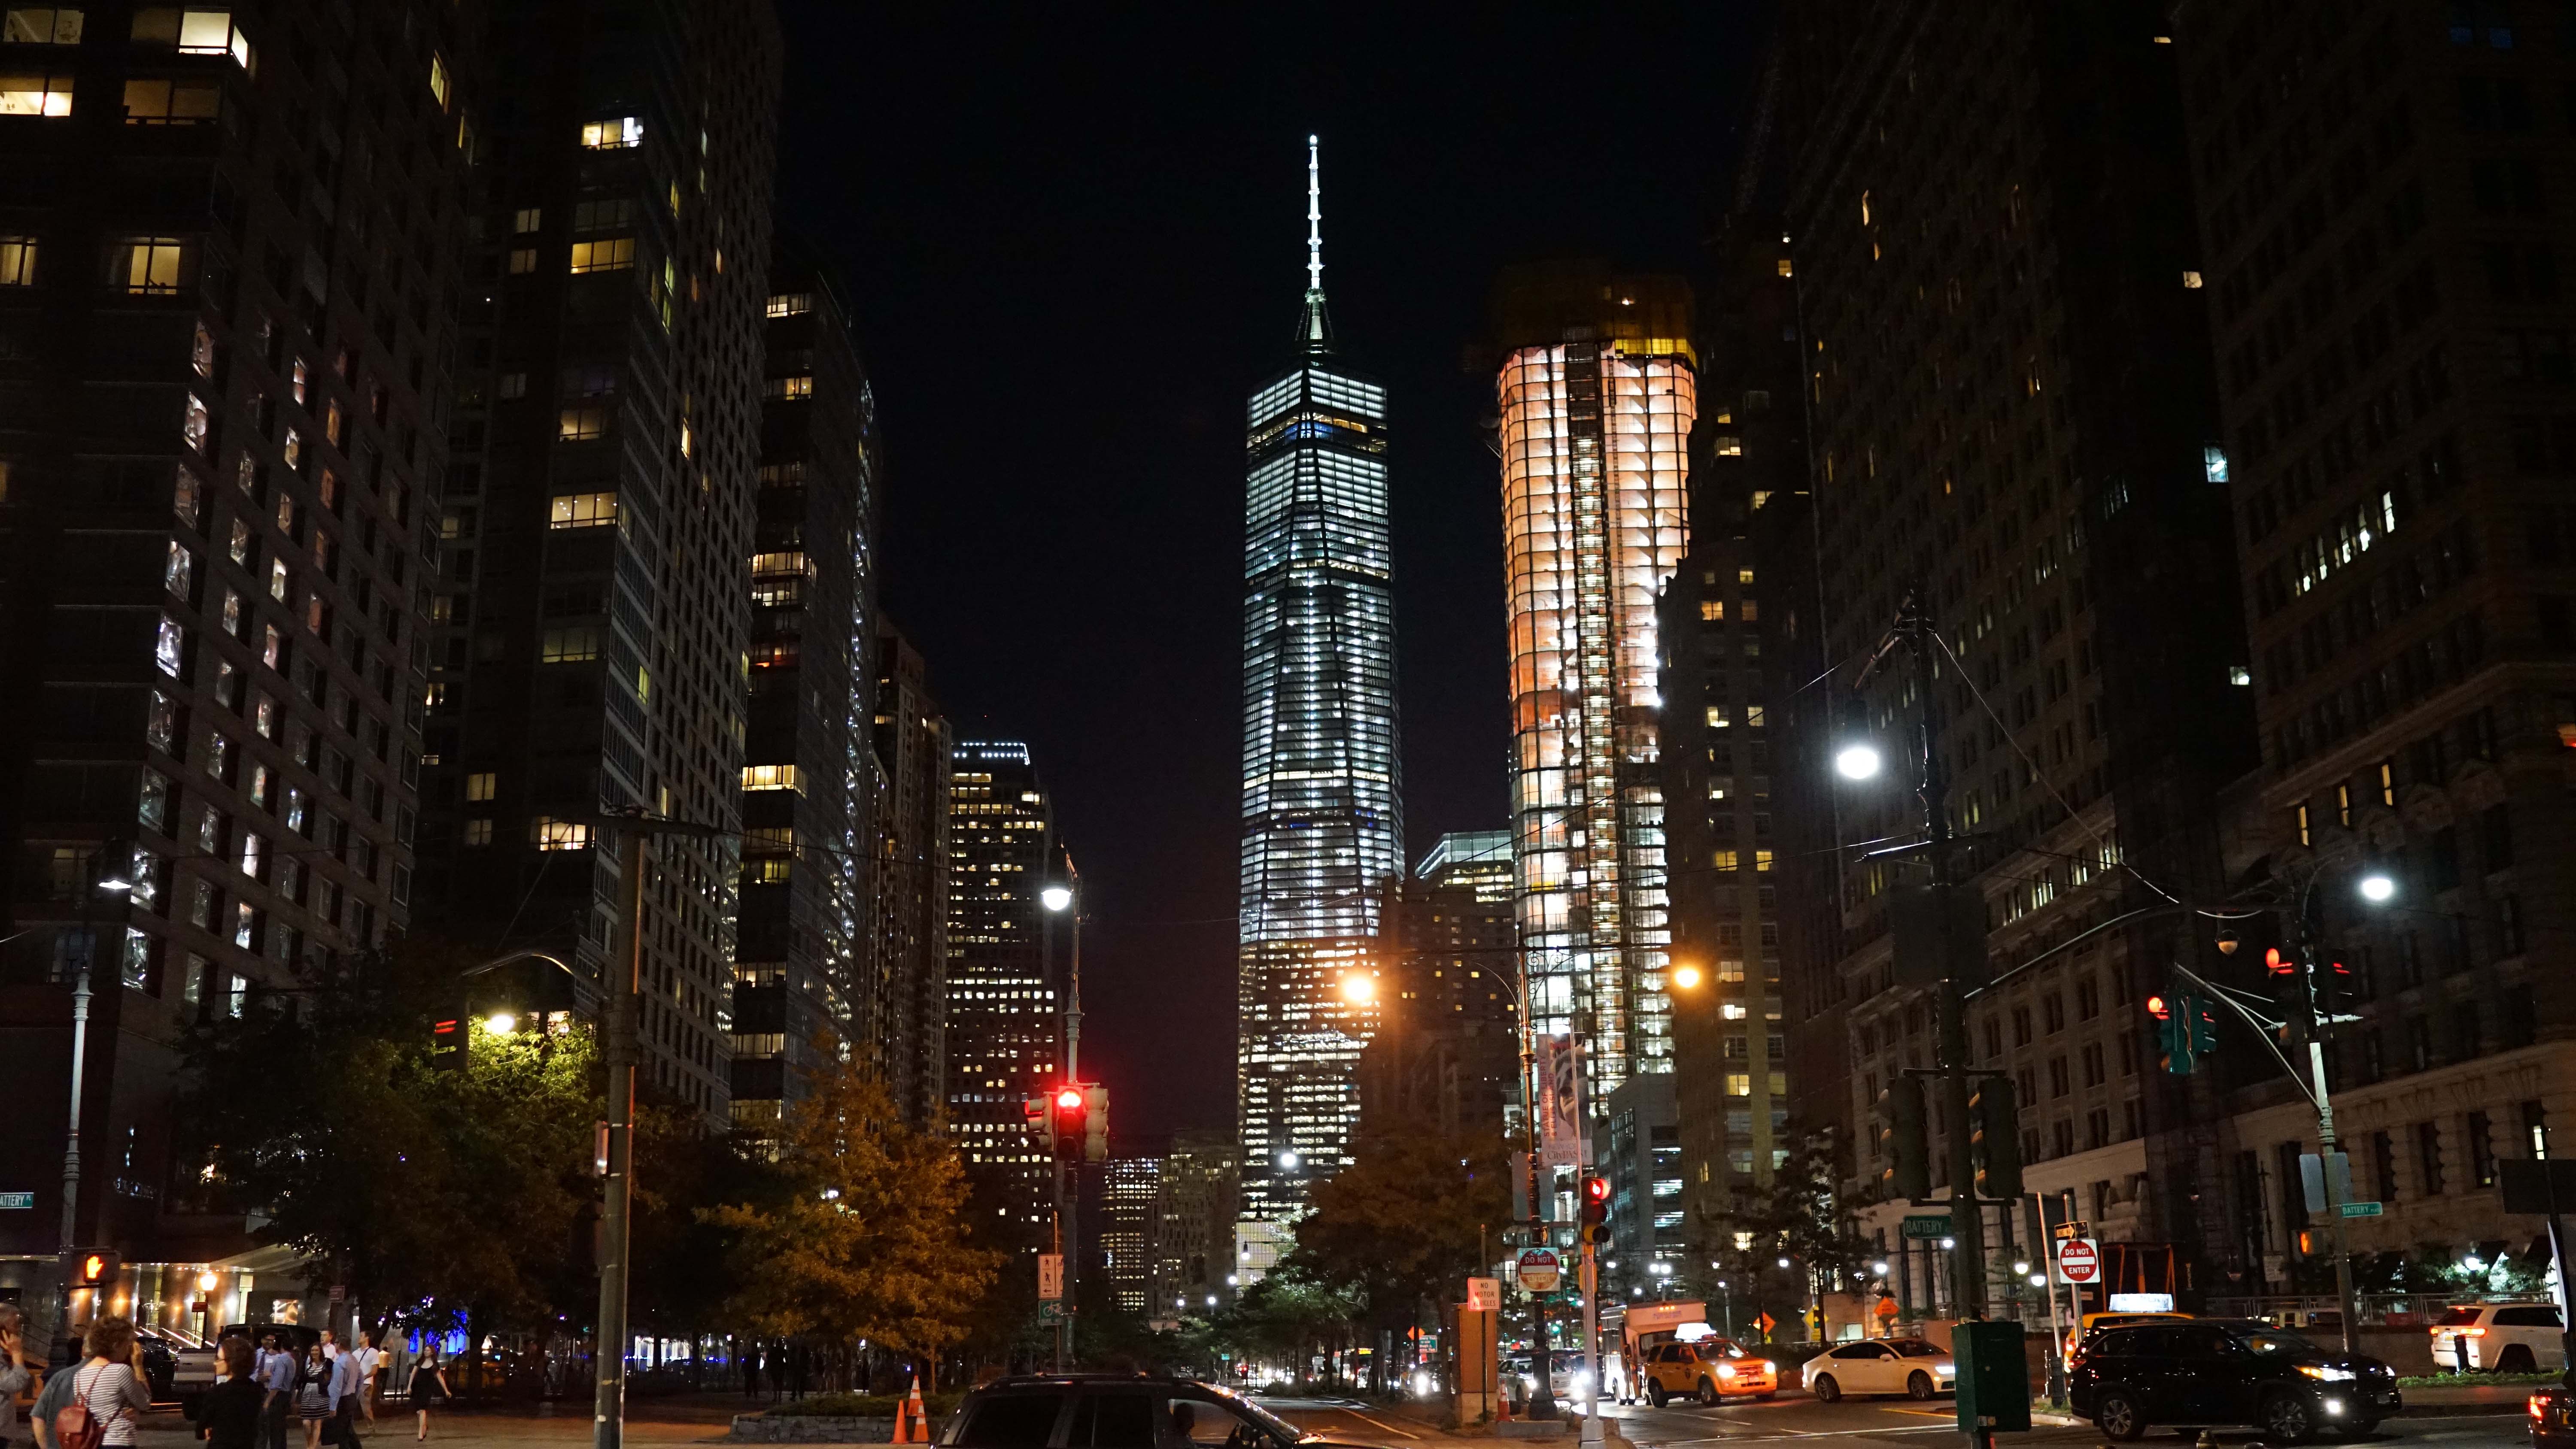 WTC 1 50 West night